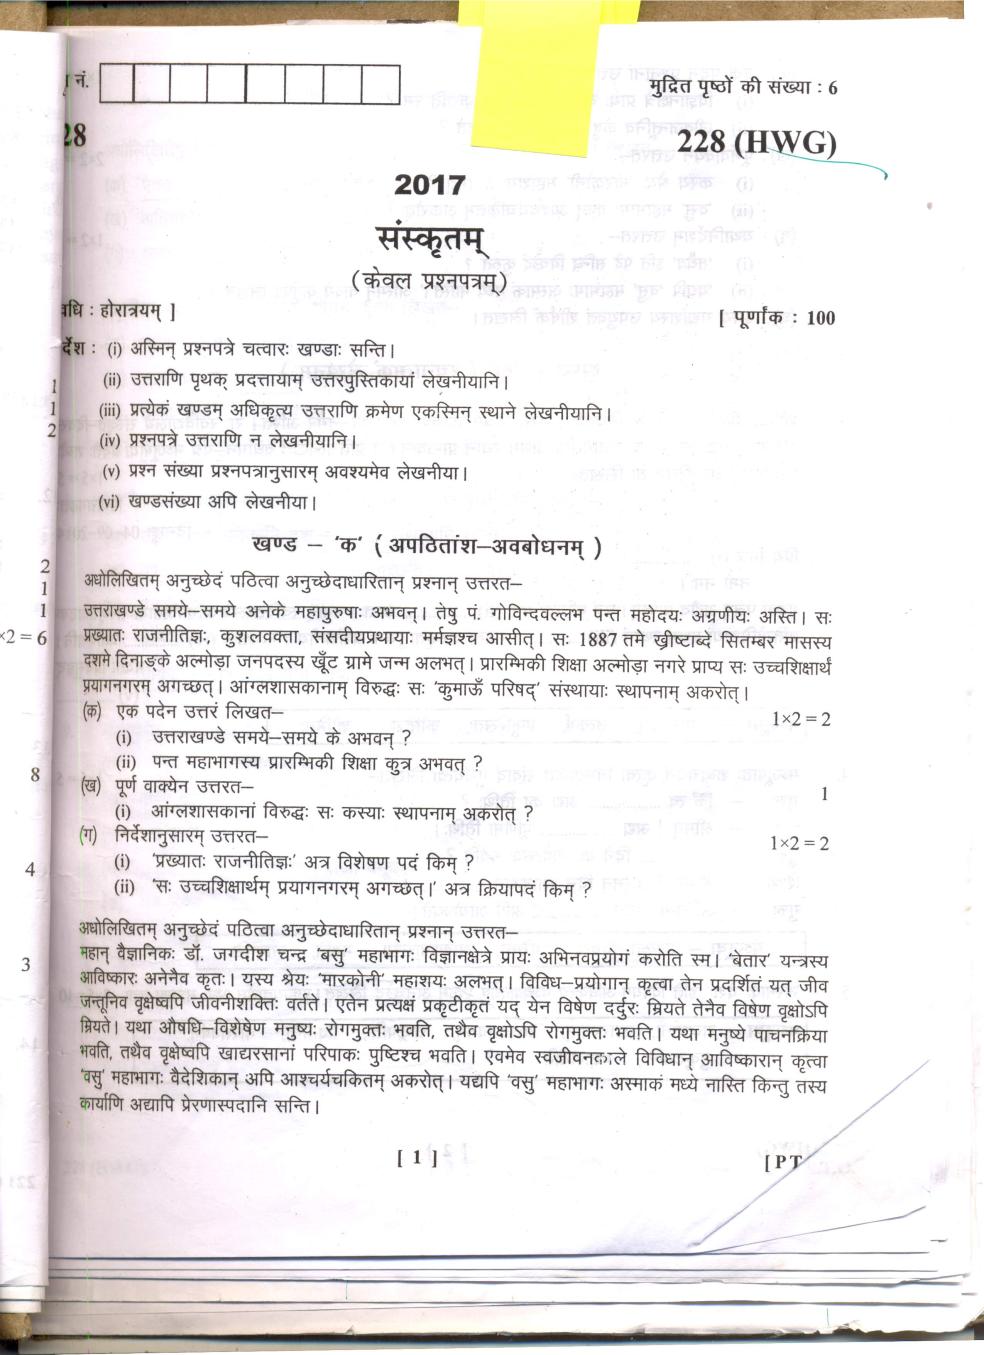 Uttarakhand Board Class 10 Question Paper 2017 for Sanskrit - Page 1